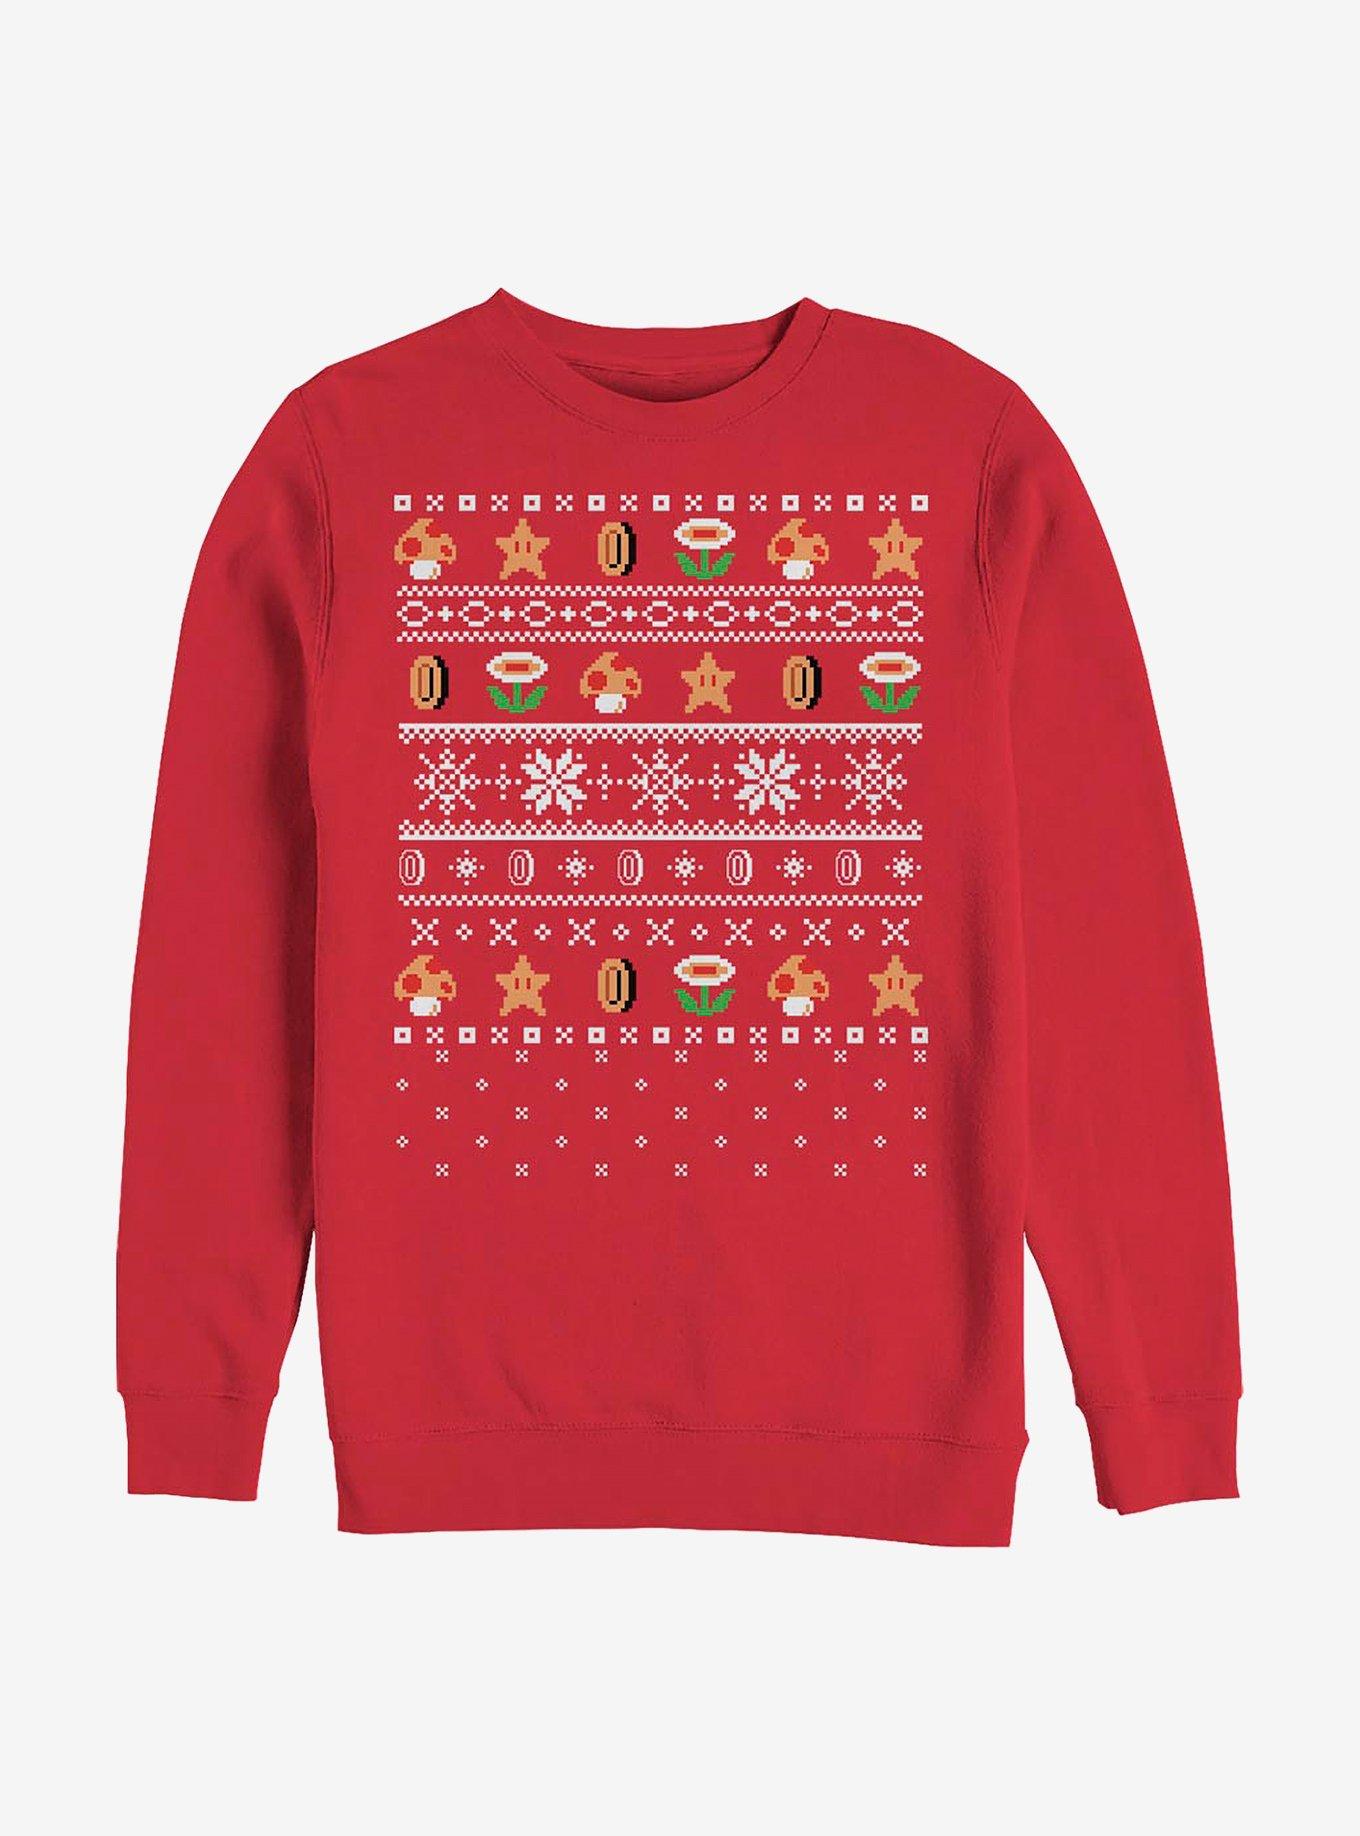 Nintendo Mario Items Win Ugly Holiday Star Crew Sweatshirt